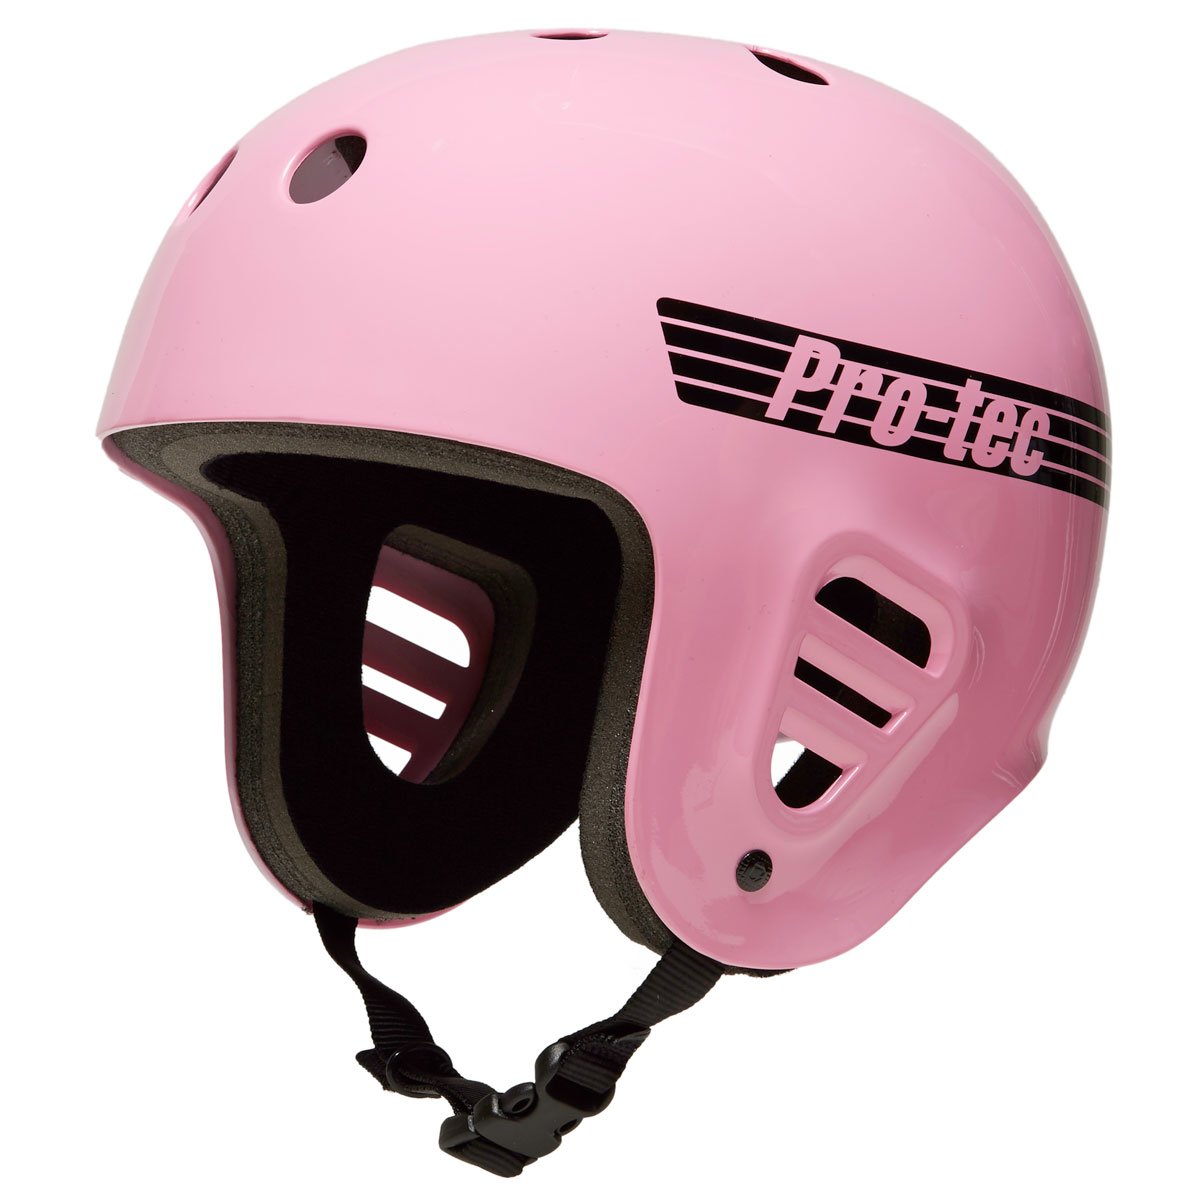 Pro-Tec Full Cut Skate Helmet - Gloss Pink image 1